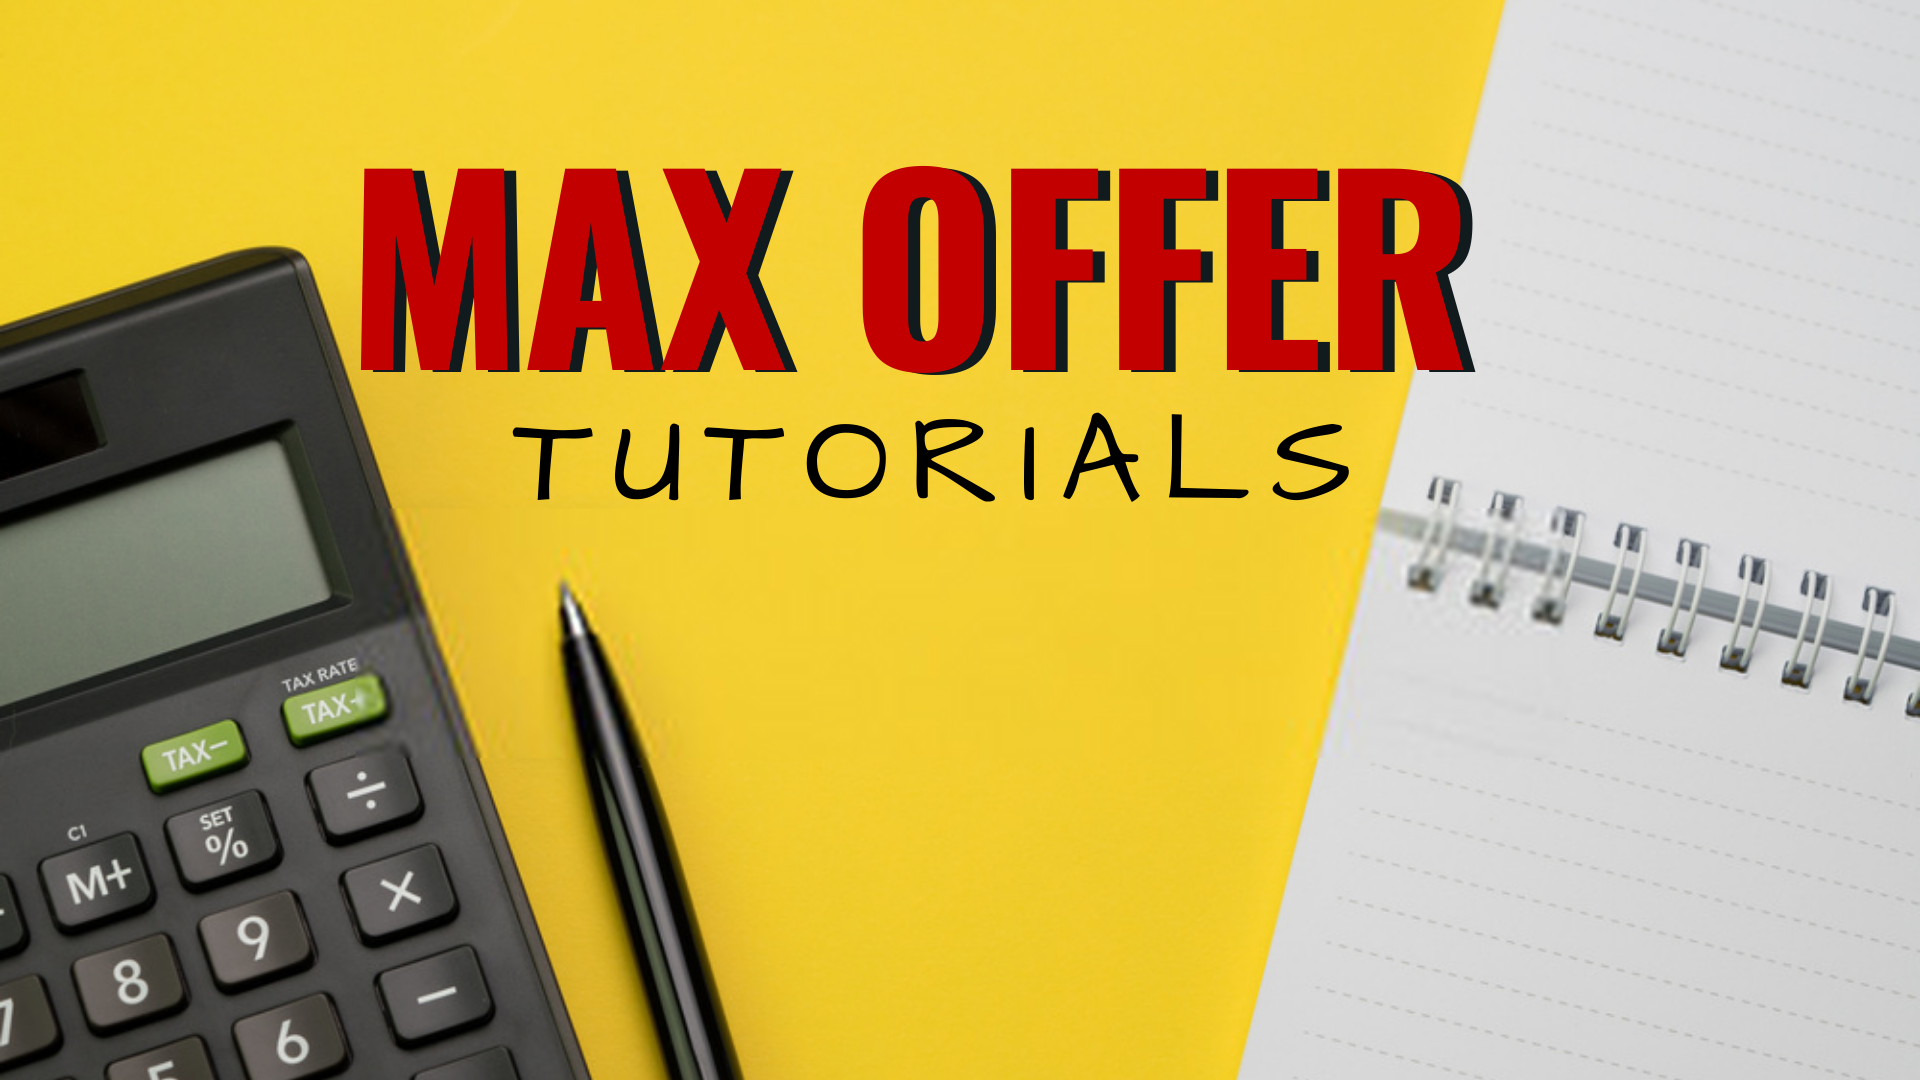 max offer tutorials banner